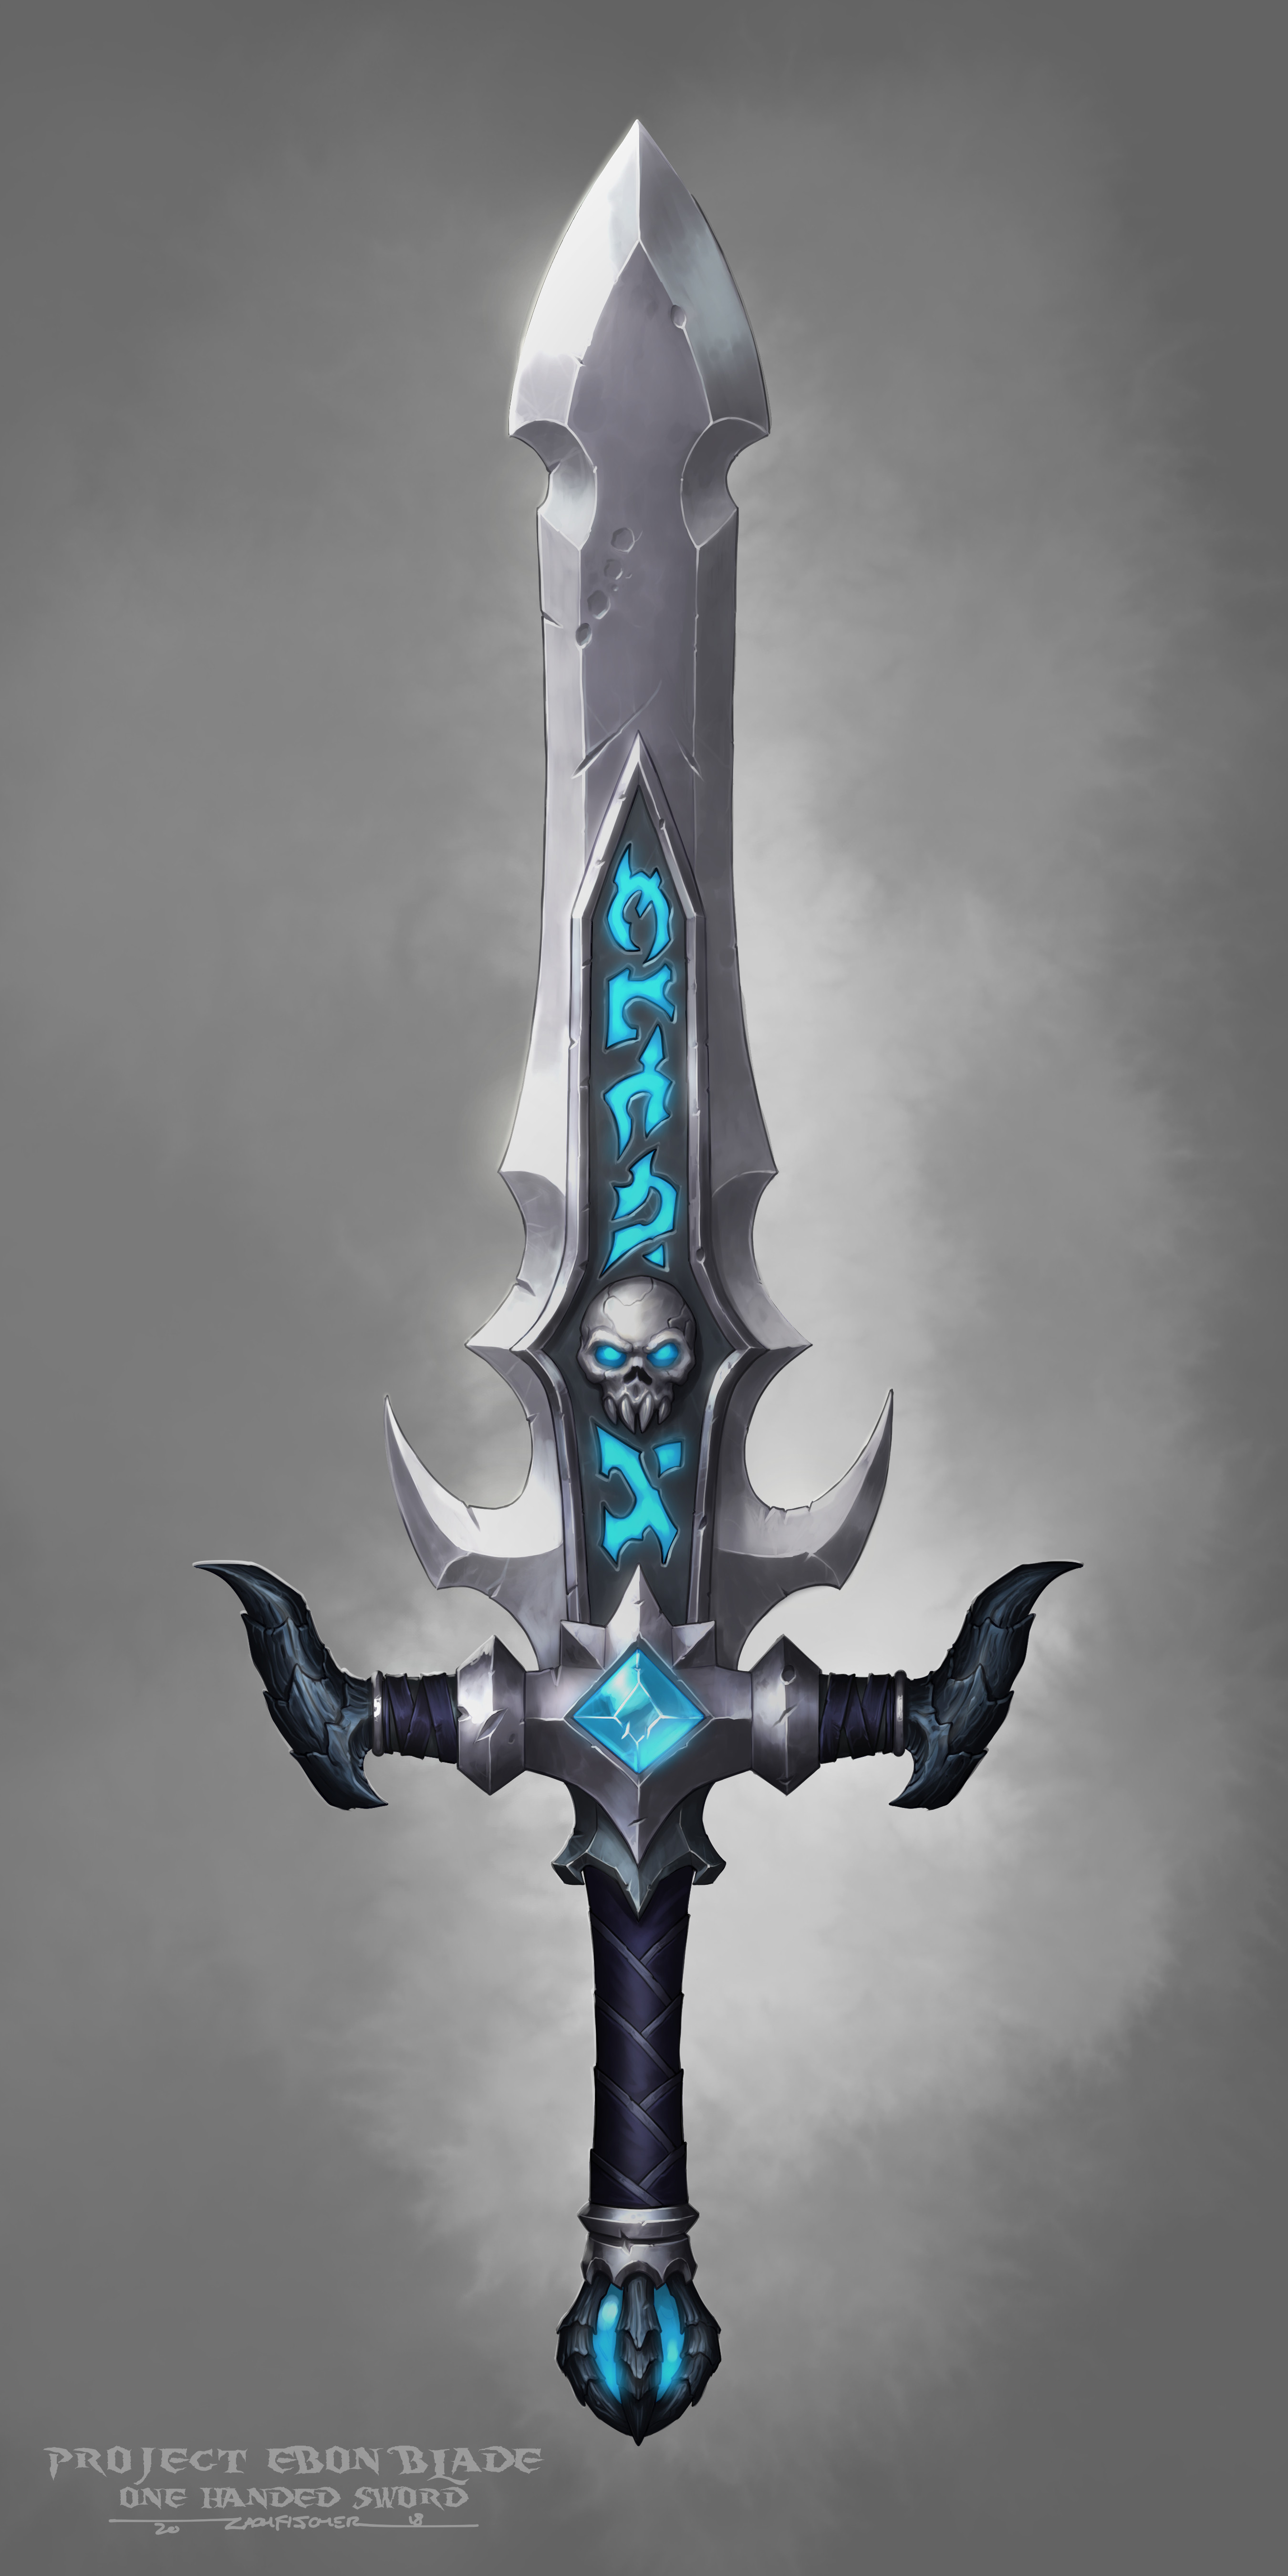 One-handed sword render